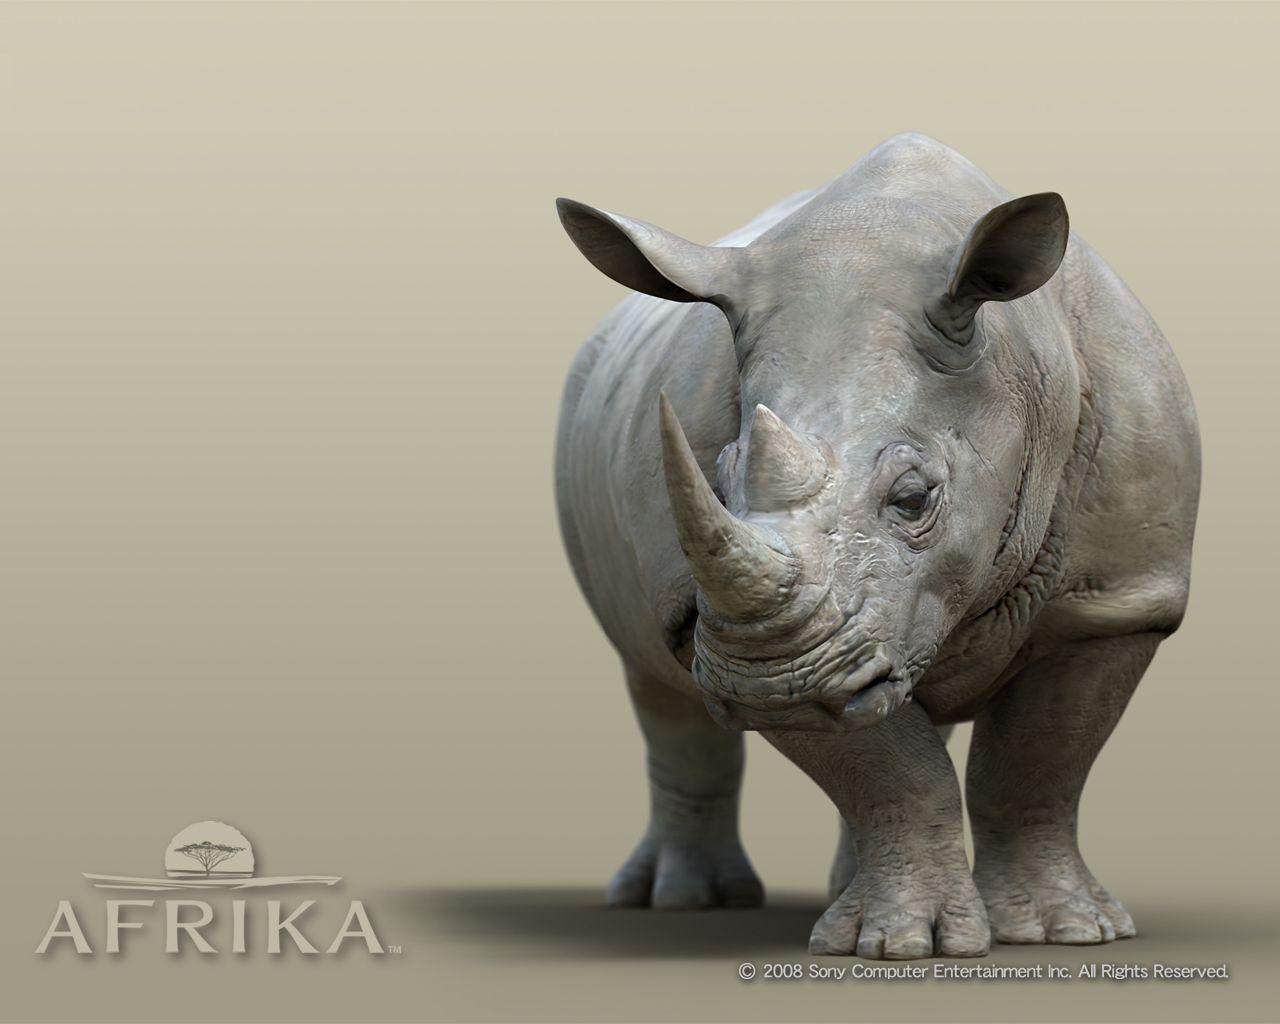 rhino. rhino wallpaper, animal wallpaper, wallpaper. ANIMALs